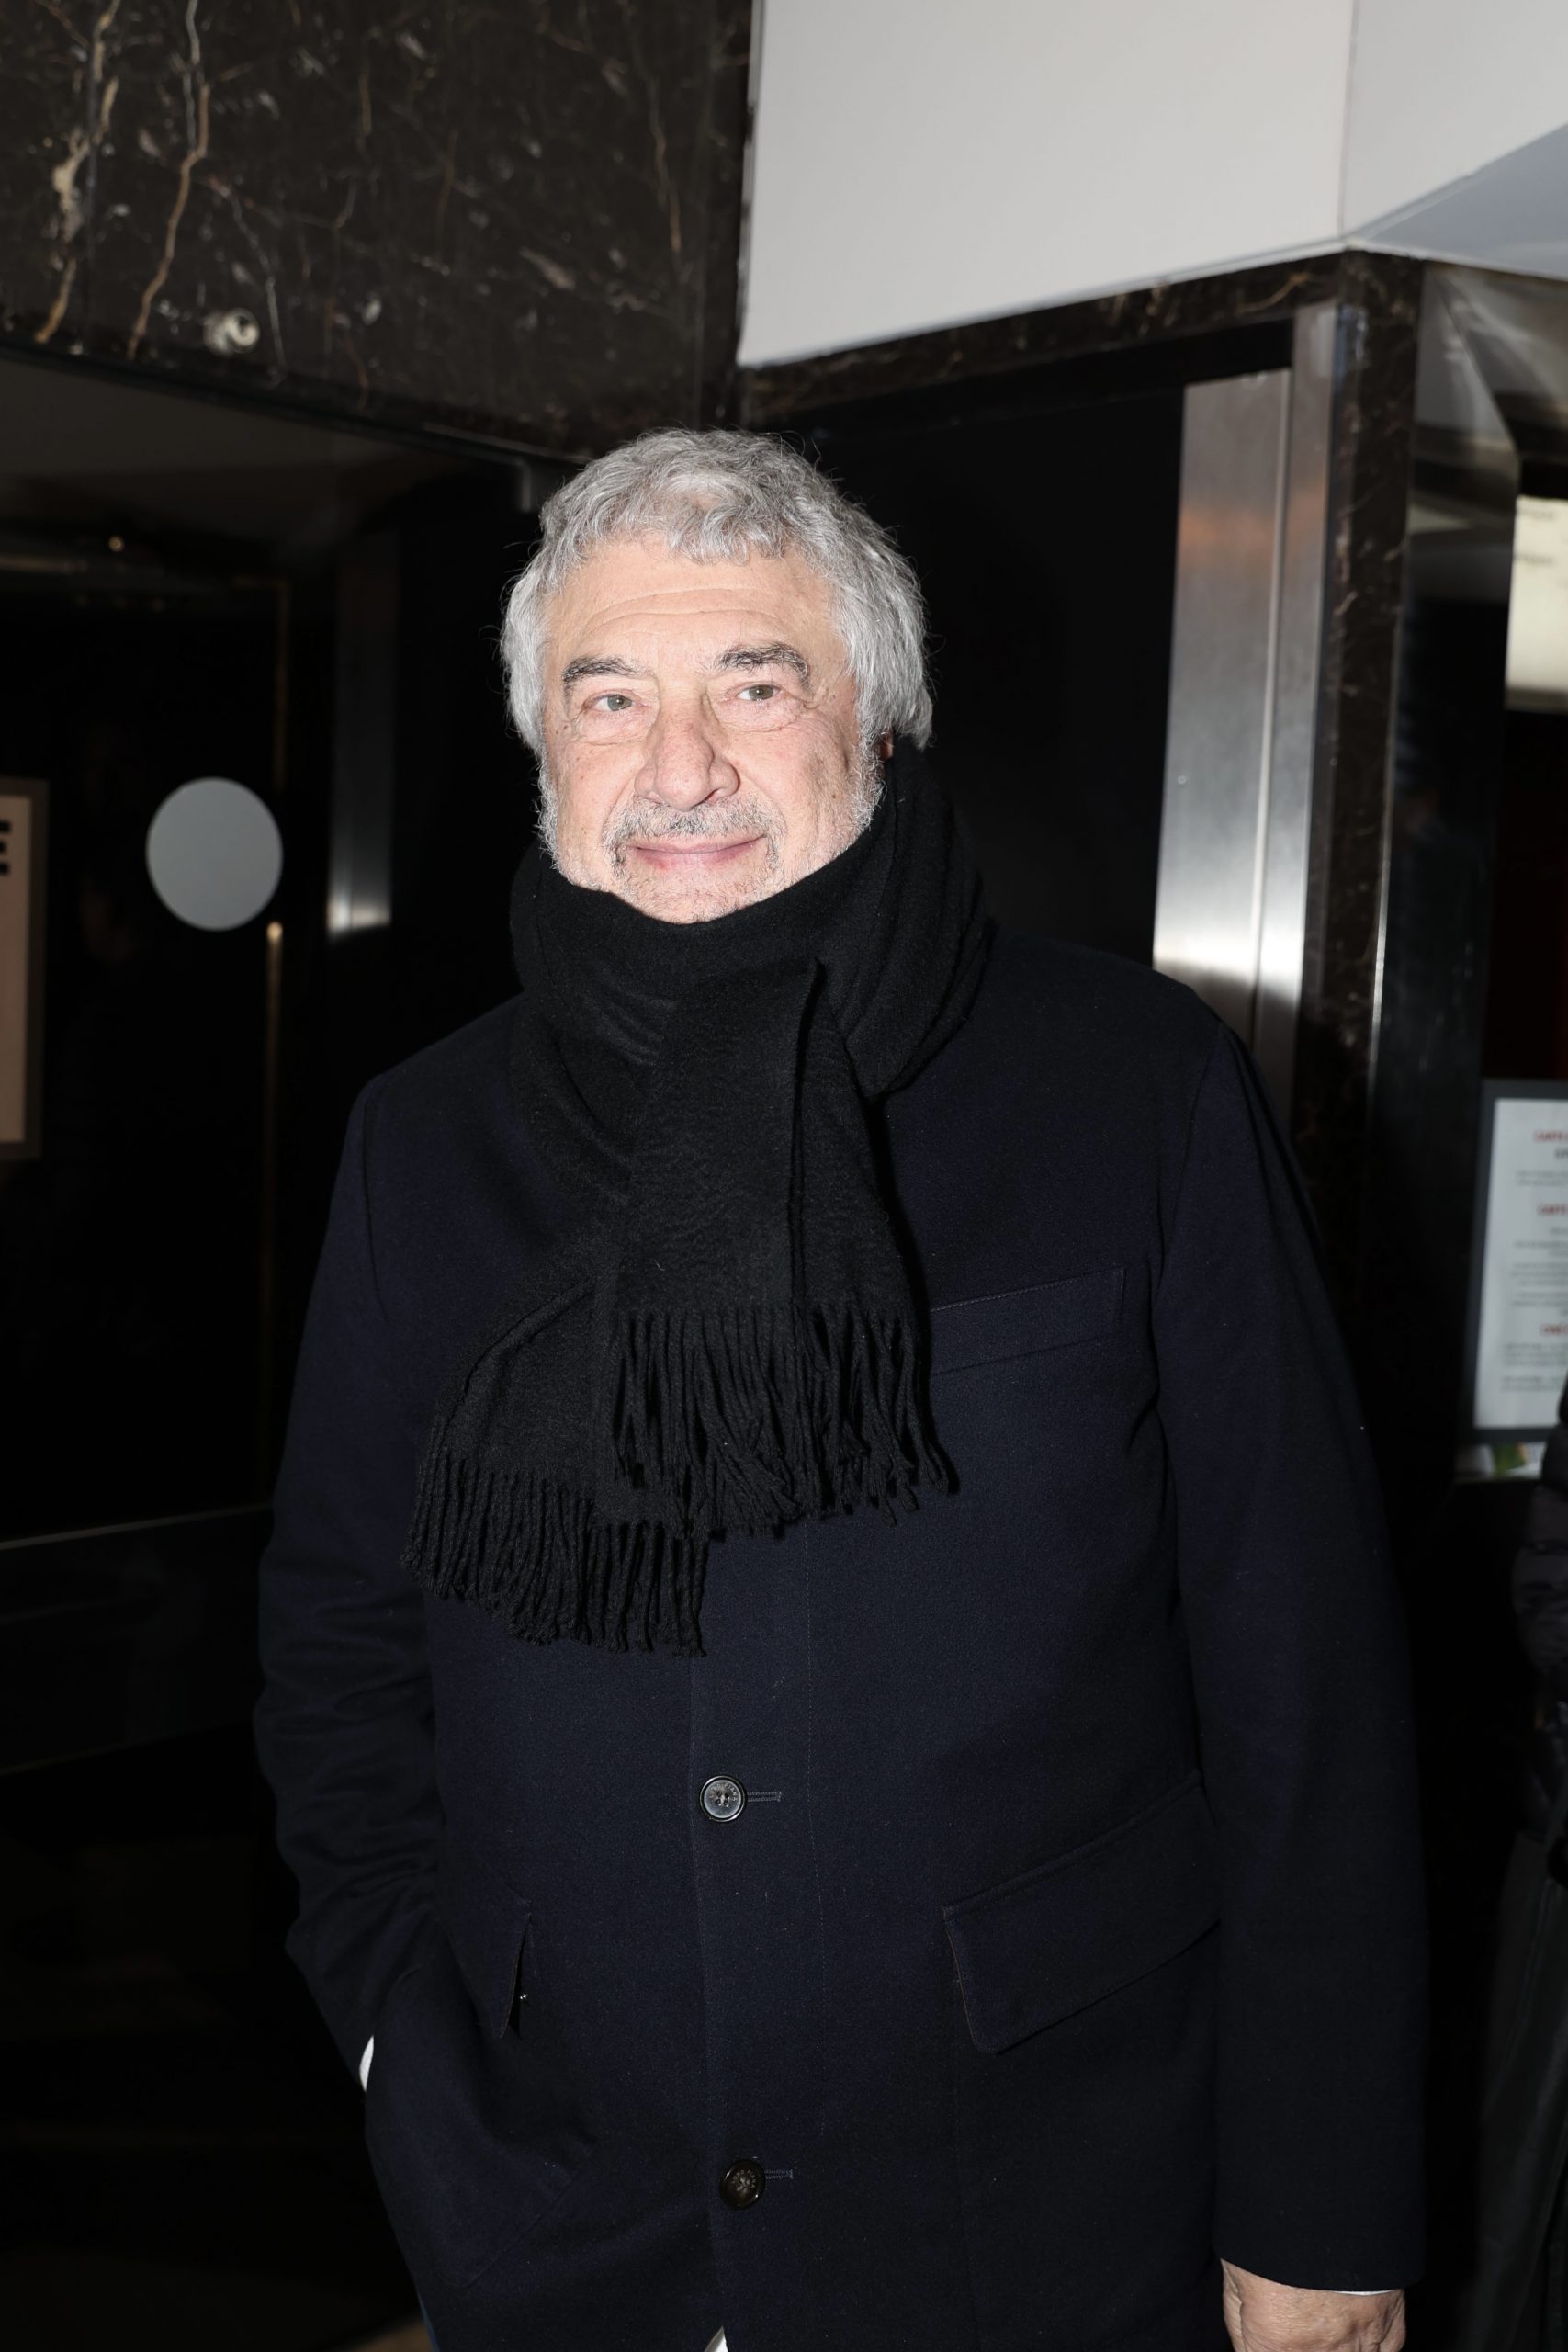 François Samuelson at the preview of BHL's film "Slava Ukraini" on 6 February 2023 at the Balzac. Photo: Igor Shabalin